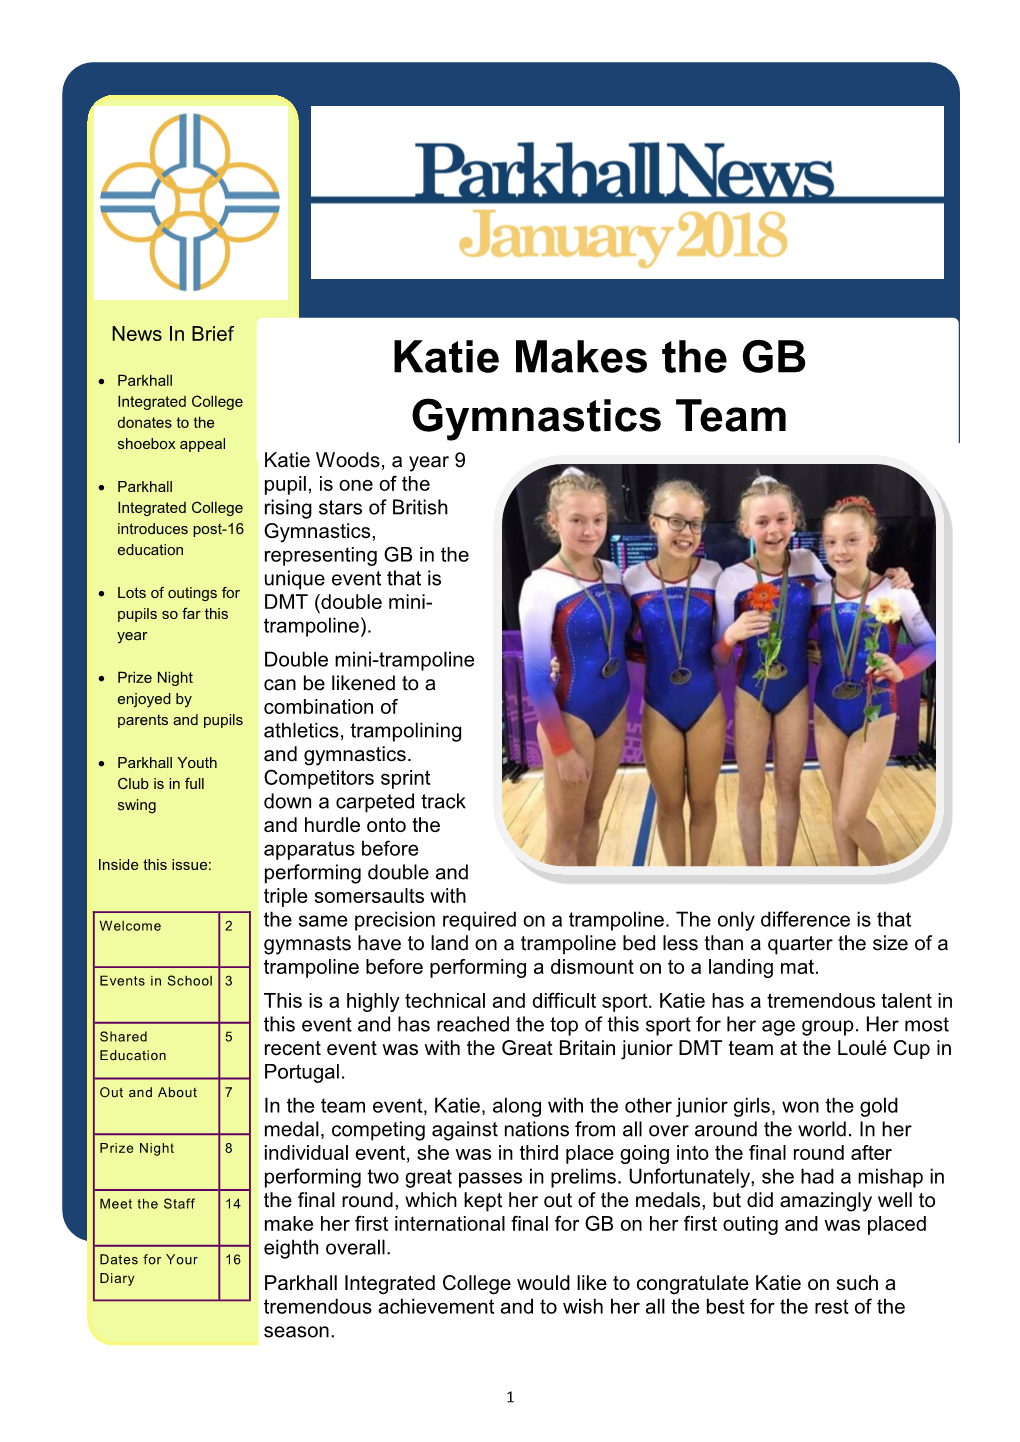 Katie Makes the GB Gymnastics Team